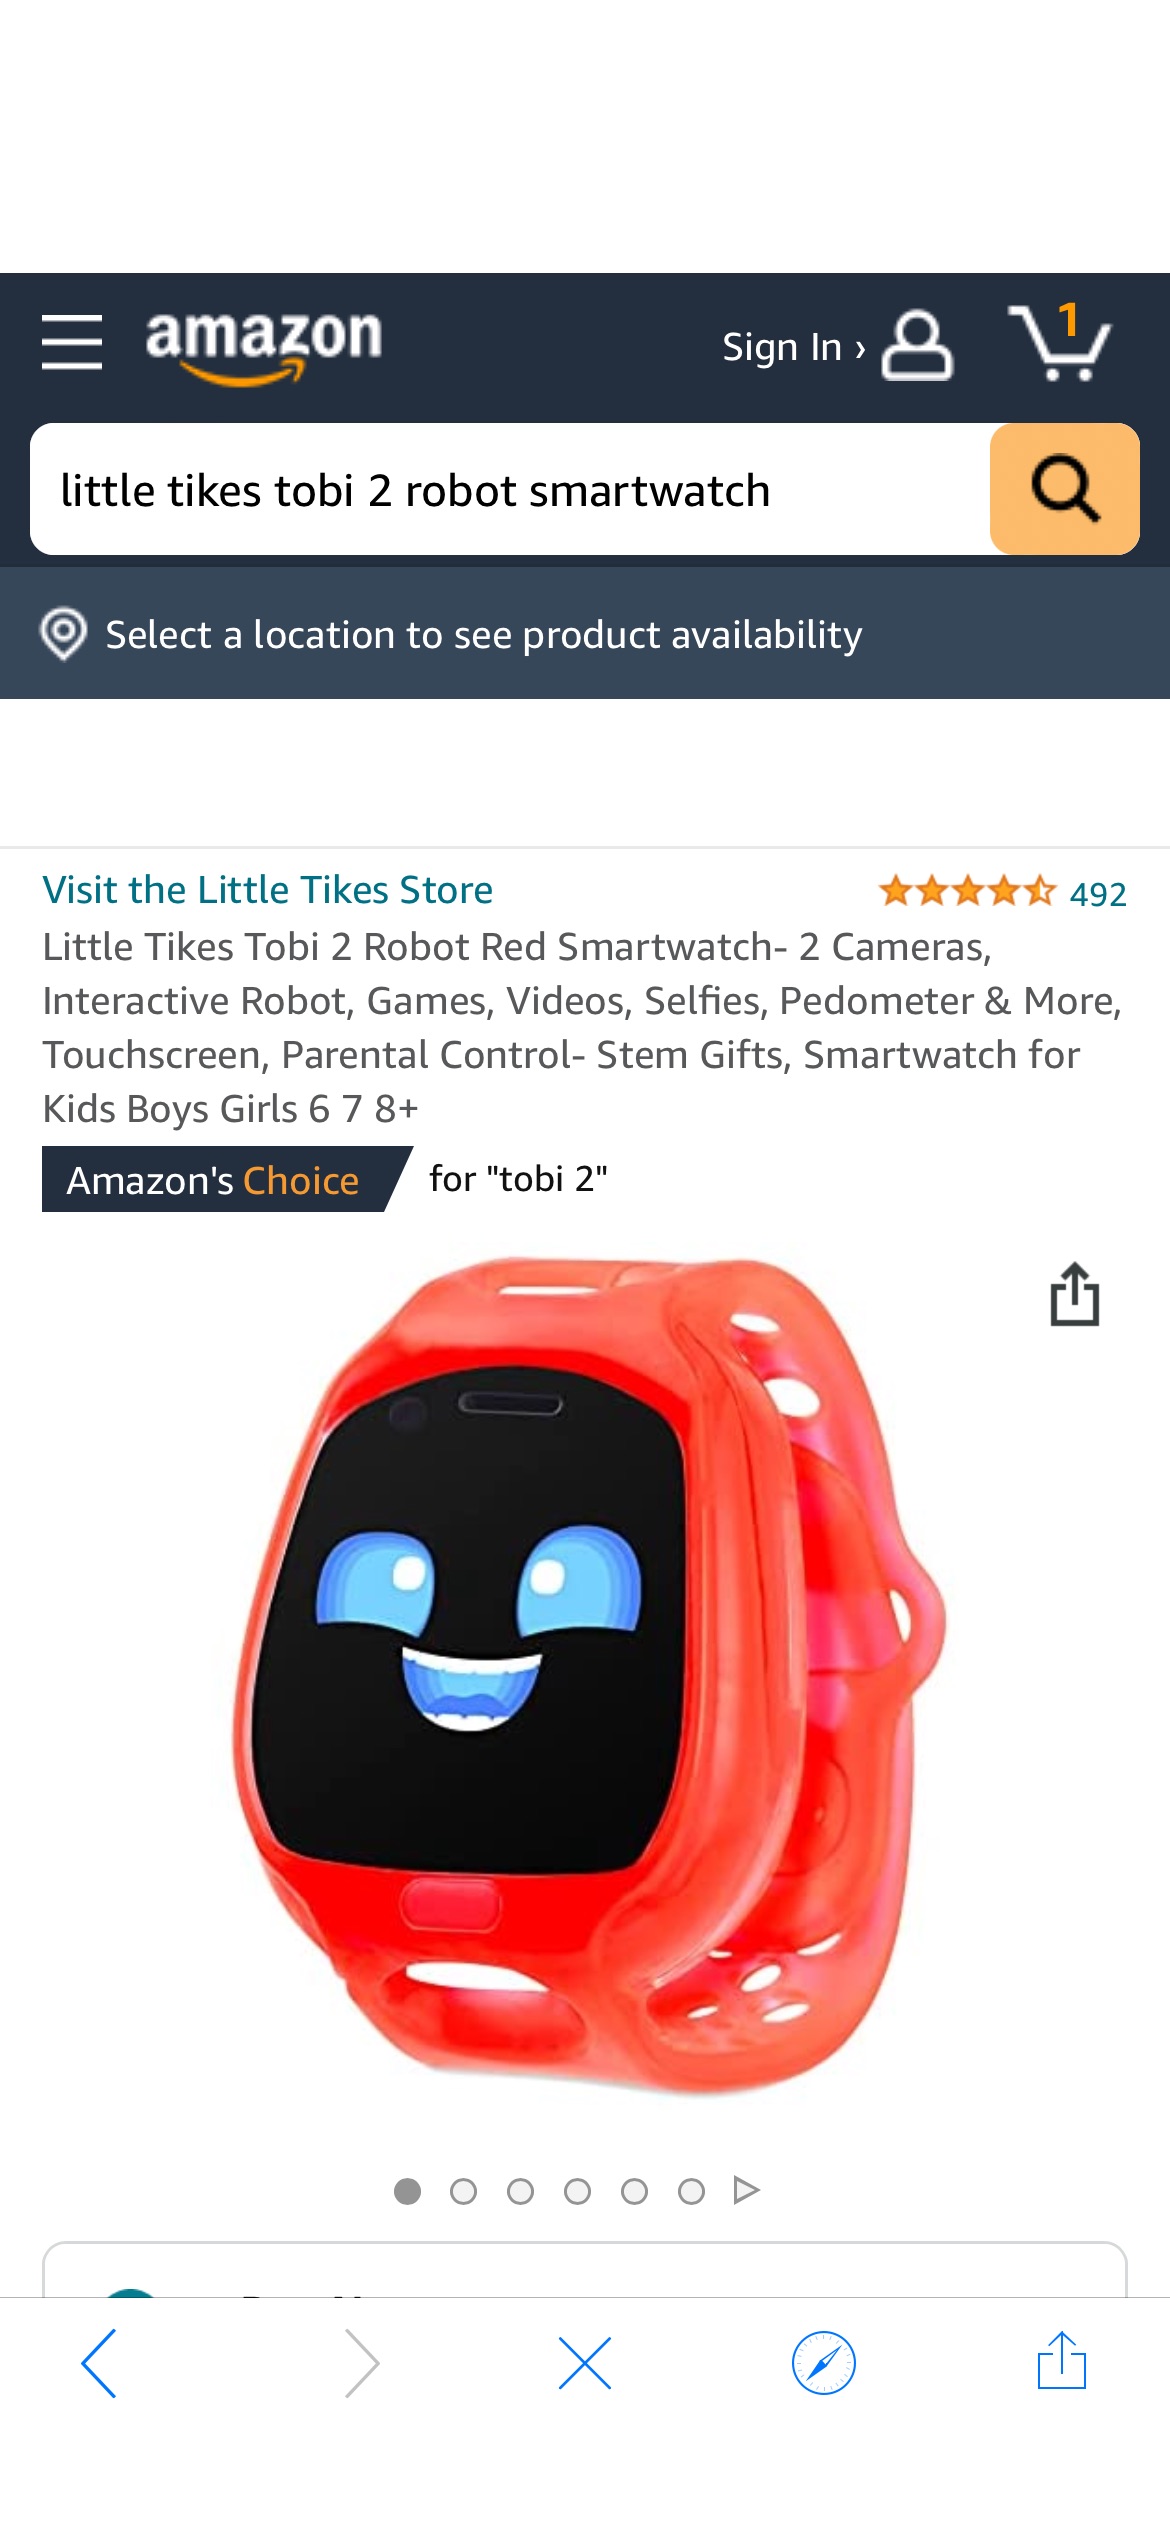 Amazon.com: Little Tikes Tobi 2 Robot Red Smartwatch- 2 Cameras, Interactive Robot, Games, Videos, Selfies, Pedometer & More, Touchscreen, Parental Control little tikes 儿童带摄像头手表